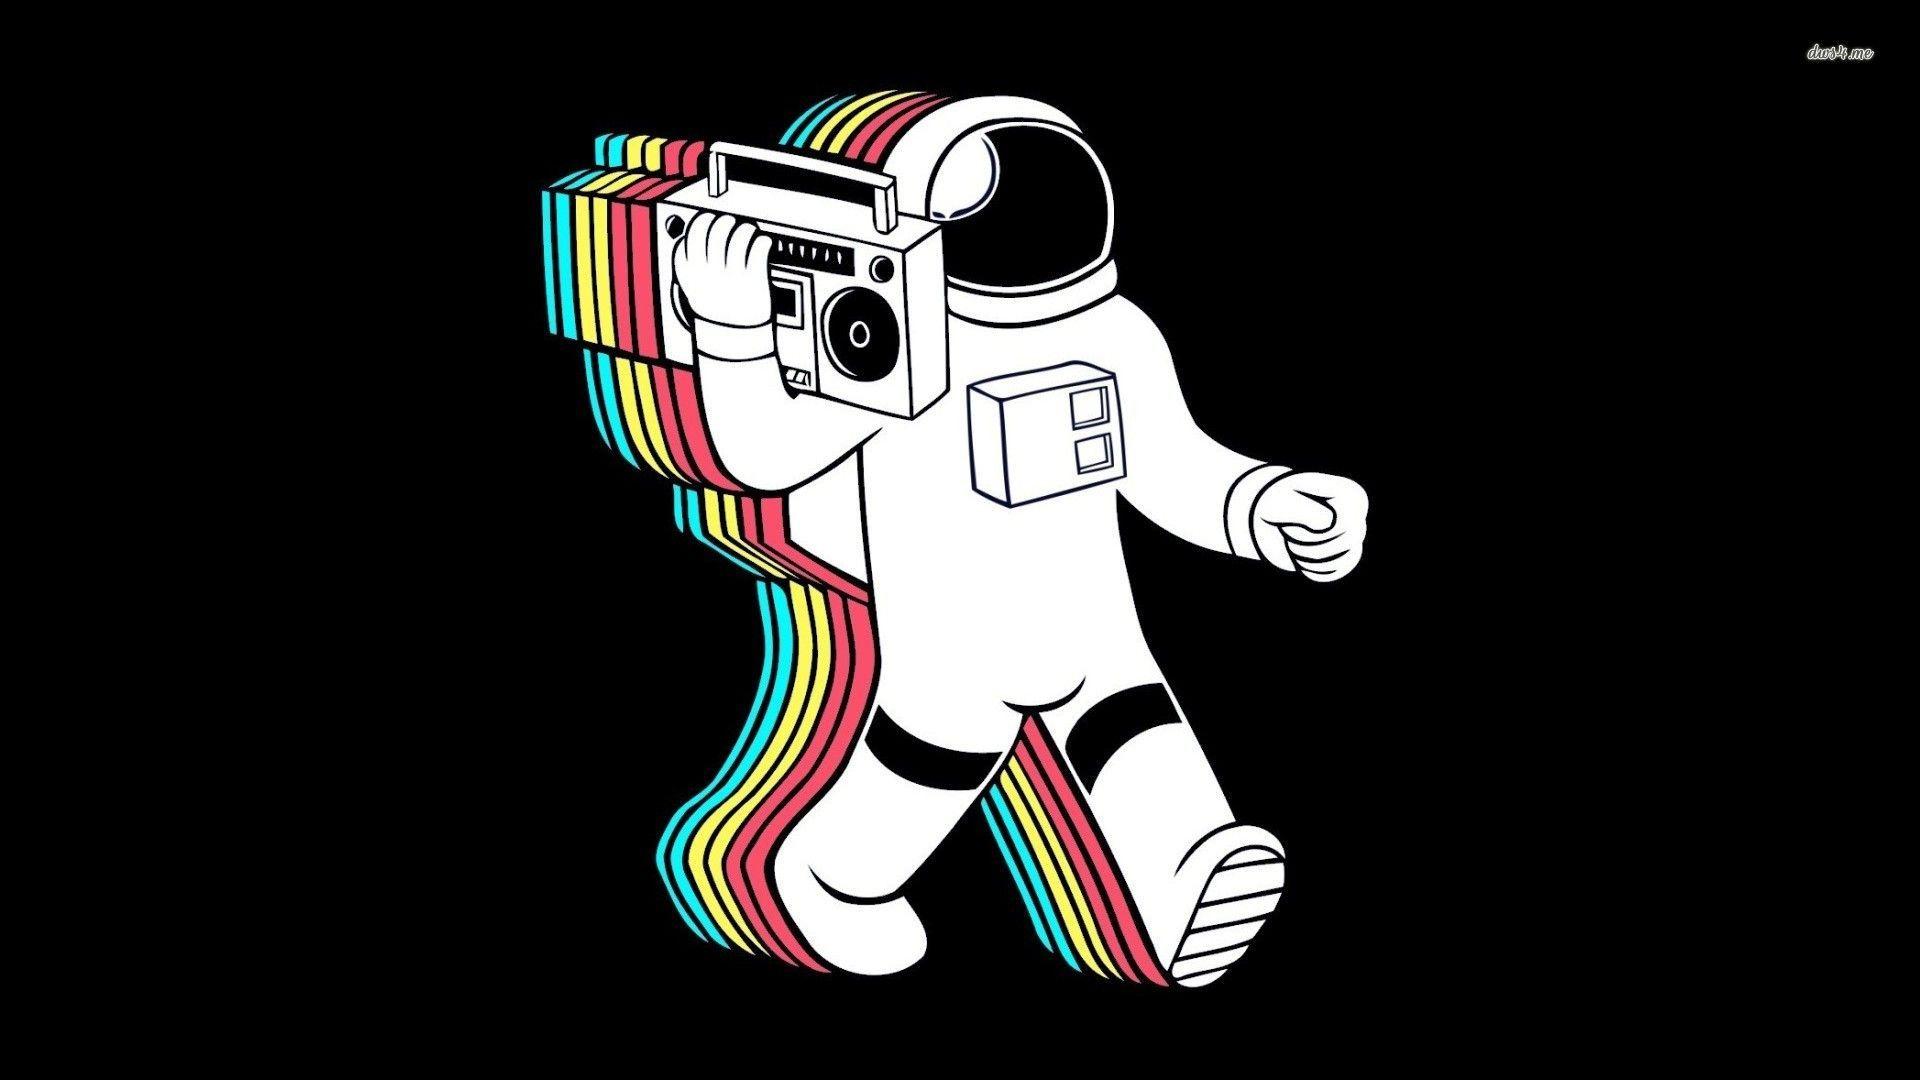 Astronaut and boombox HD wallpaper. Astronaut wallpaper, Art tshirt design, Astronaut drawing